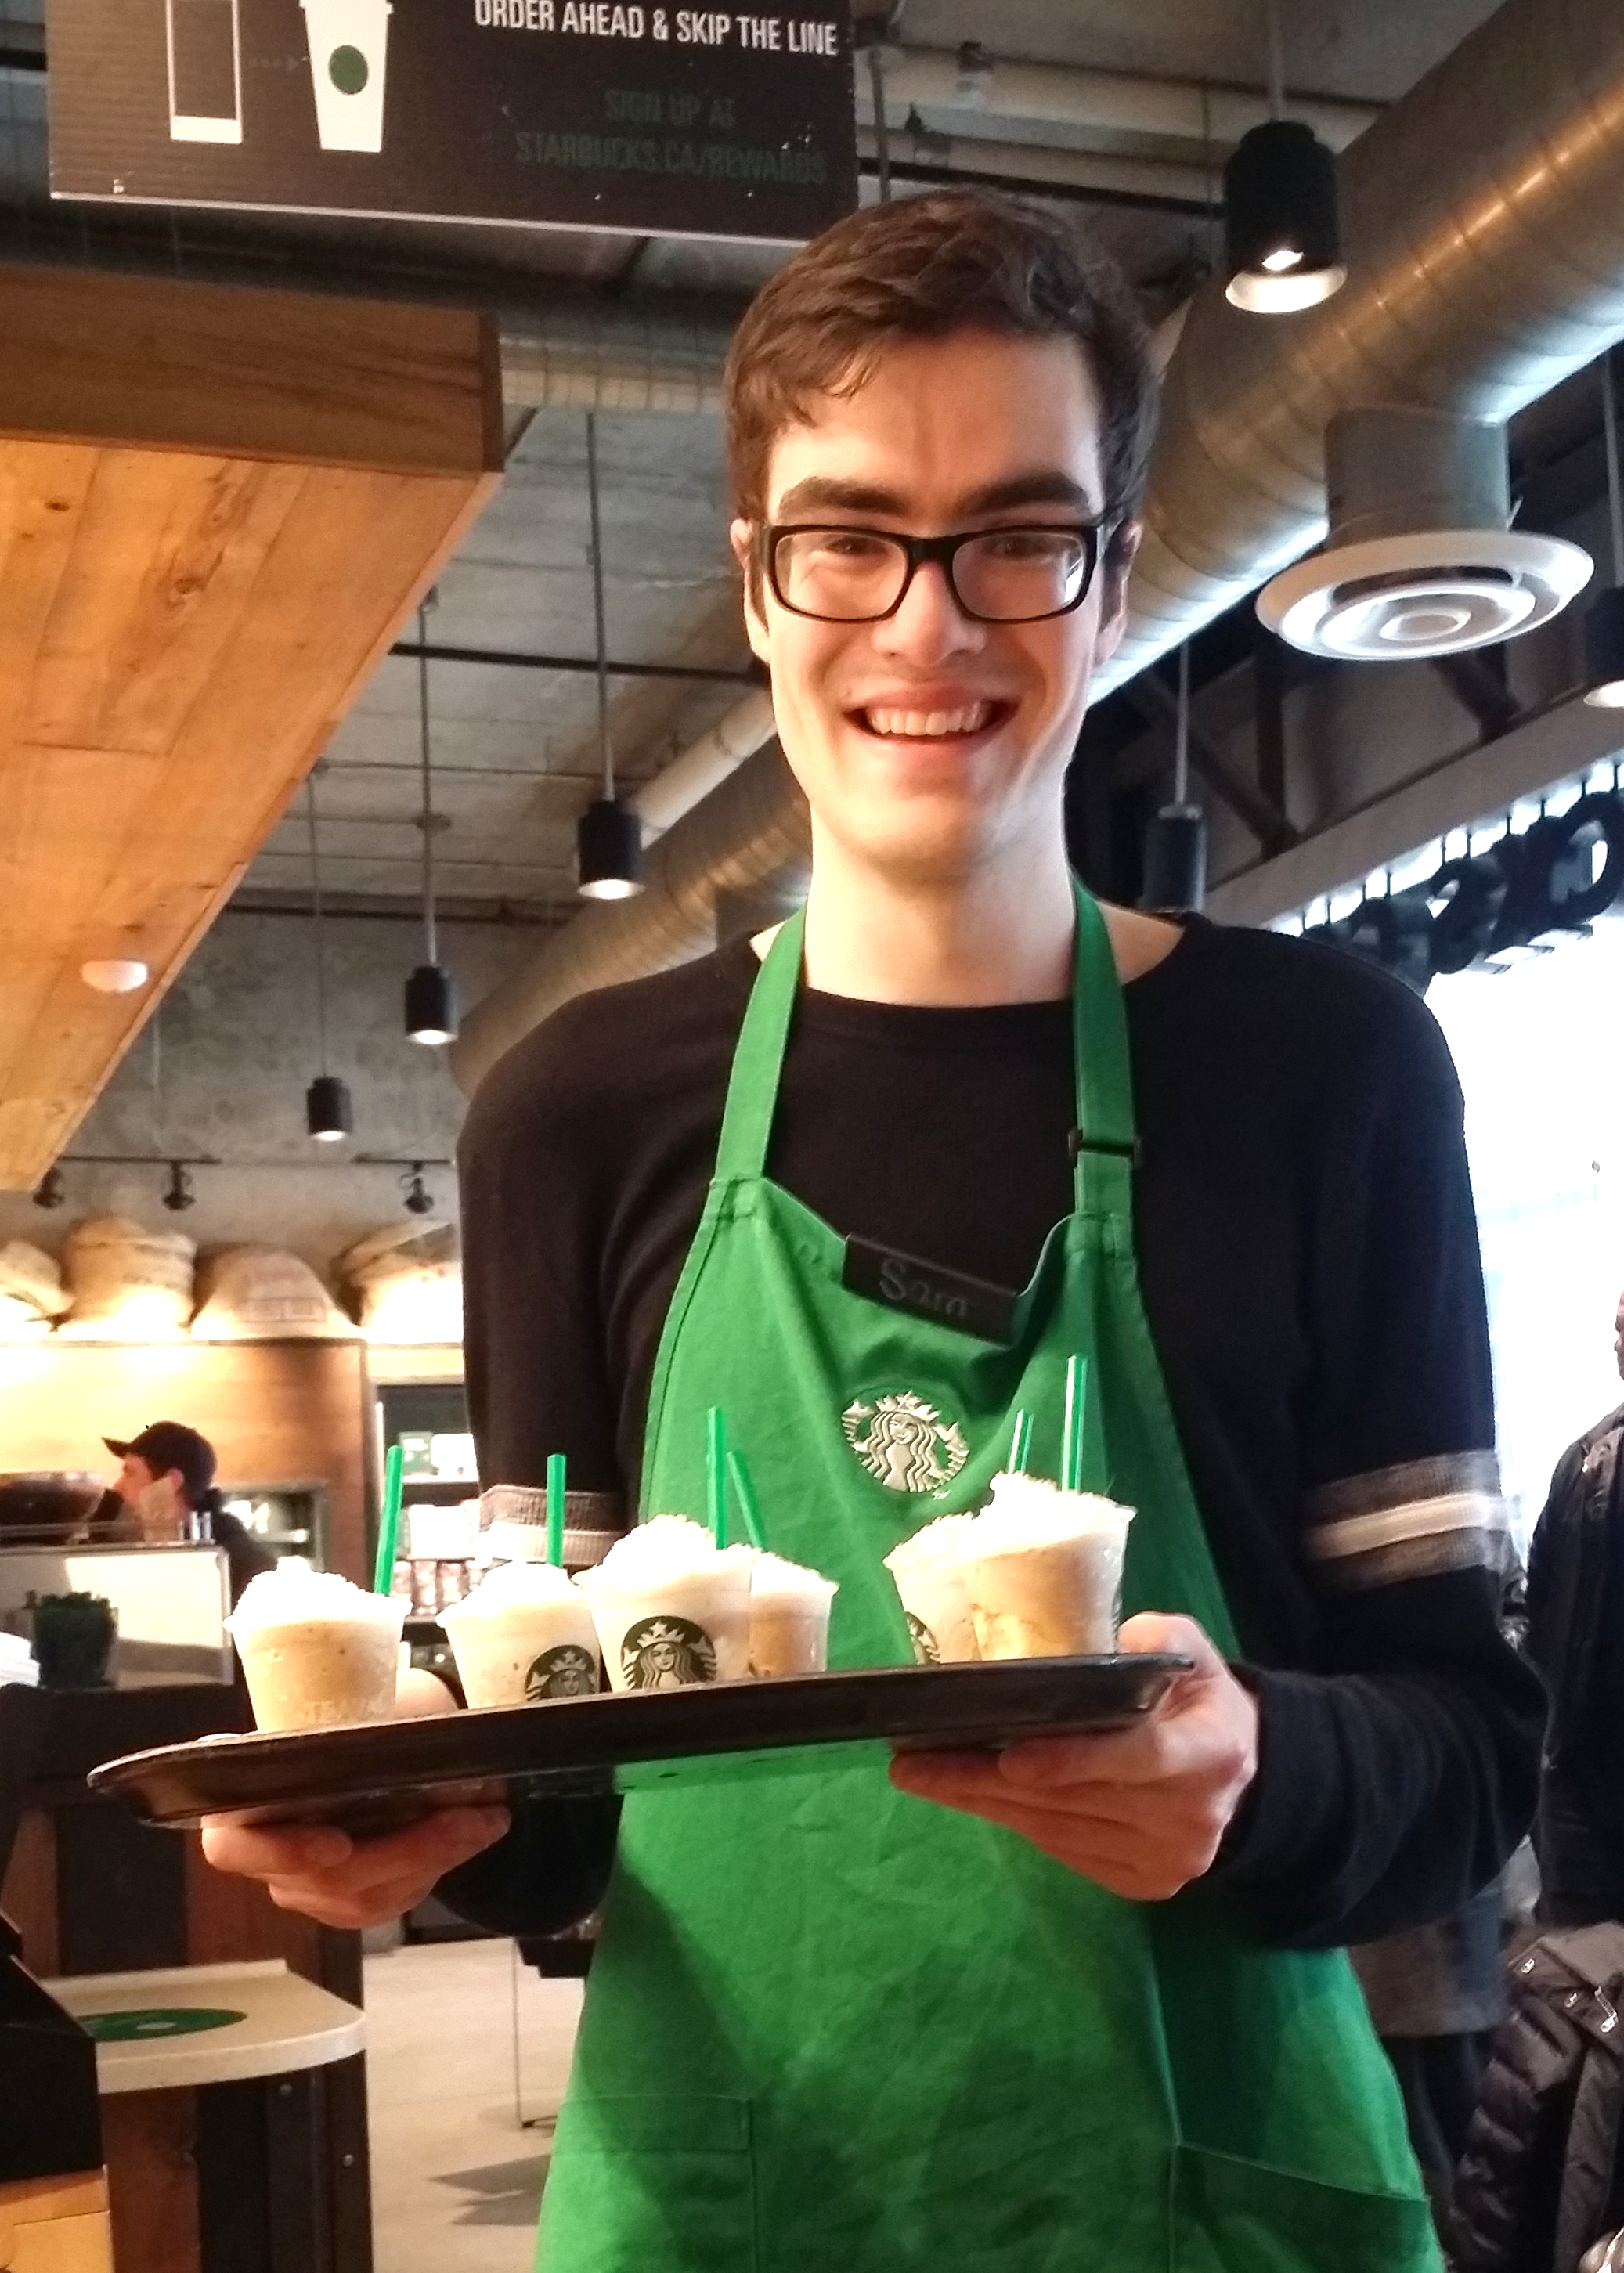 Sam serving drinks at Starbucks.